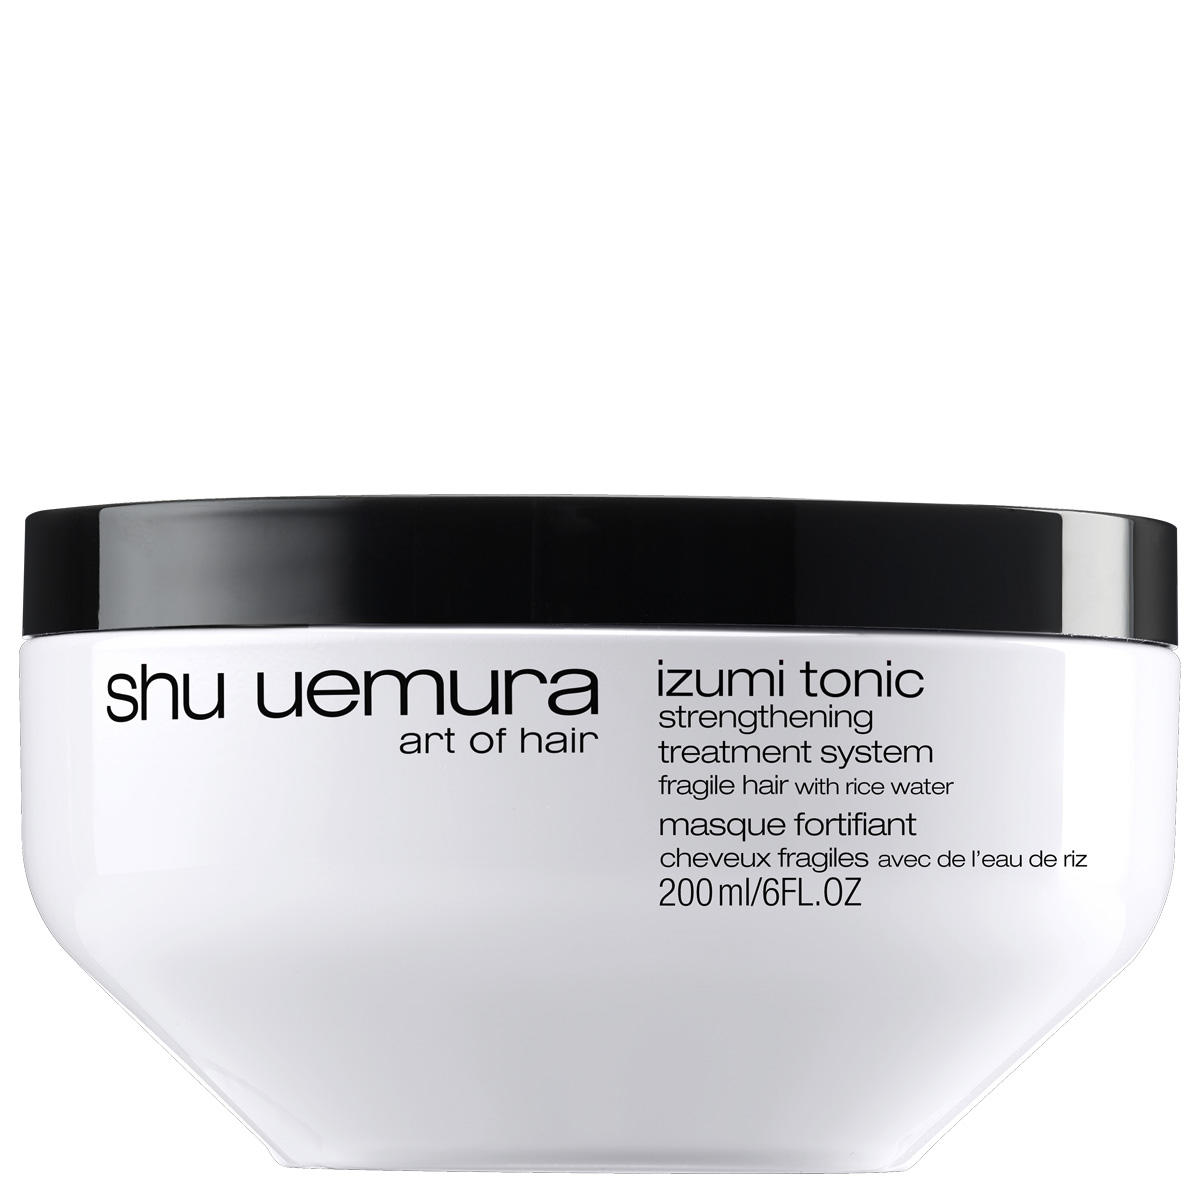 Shu Uemura Izumi Tonic Máscara de refuerzo 200 ml - 1